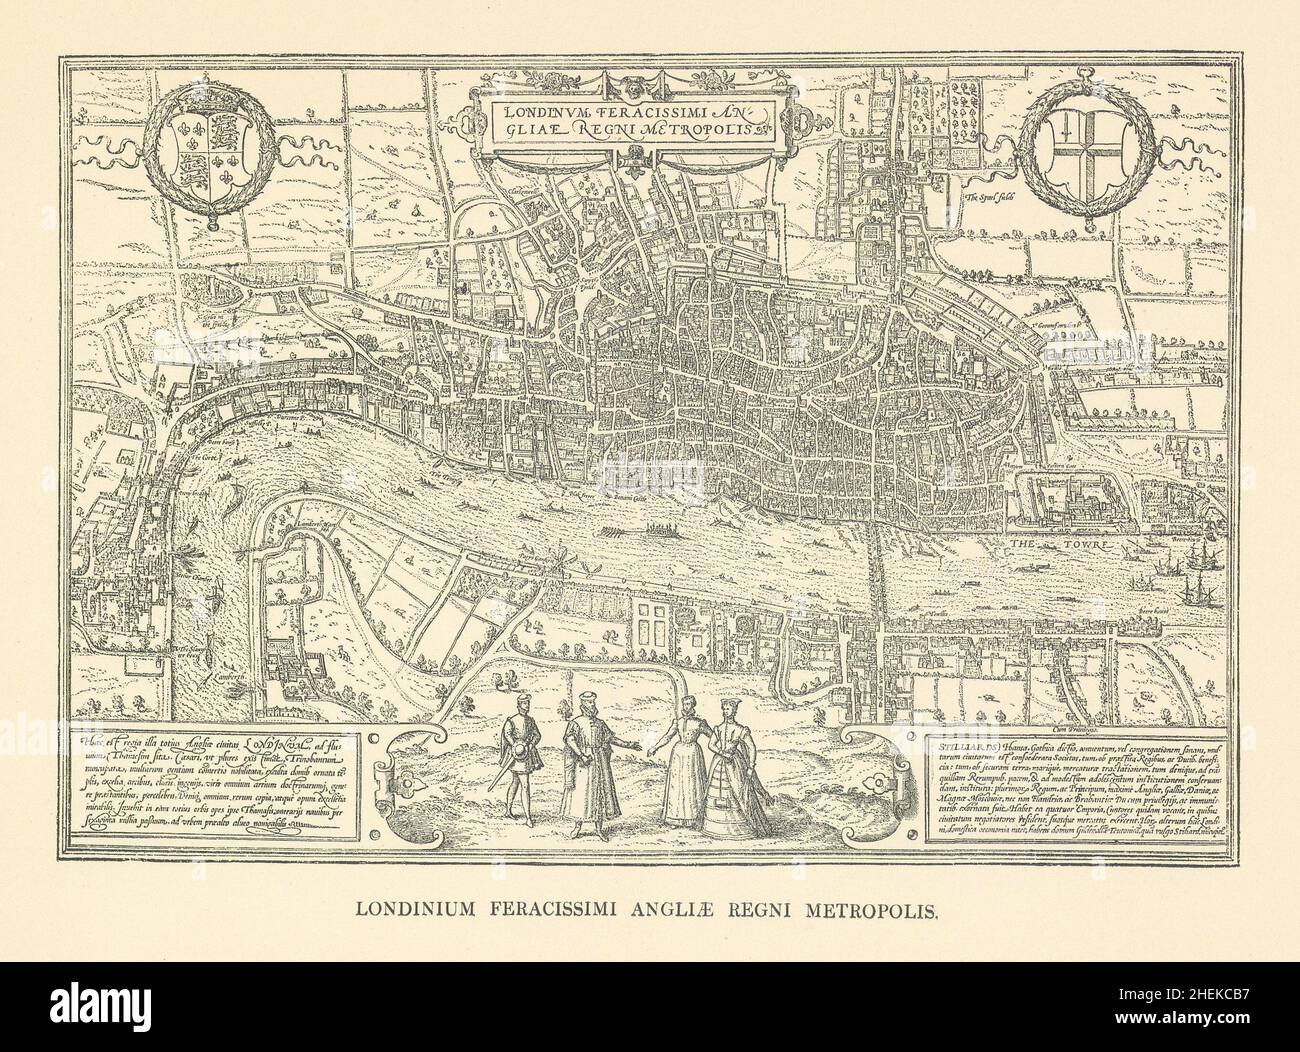 Londinium Feracissimi Angliae Regni Metropolis c.1572 after Hoefnagel 1908 map Stock Photo